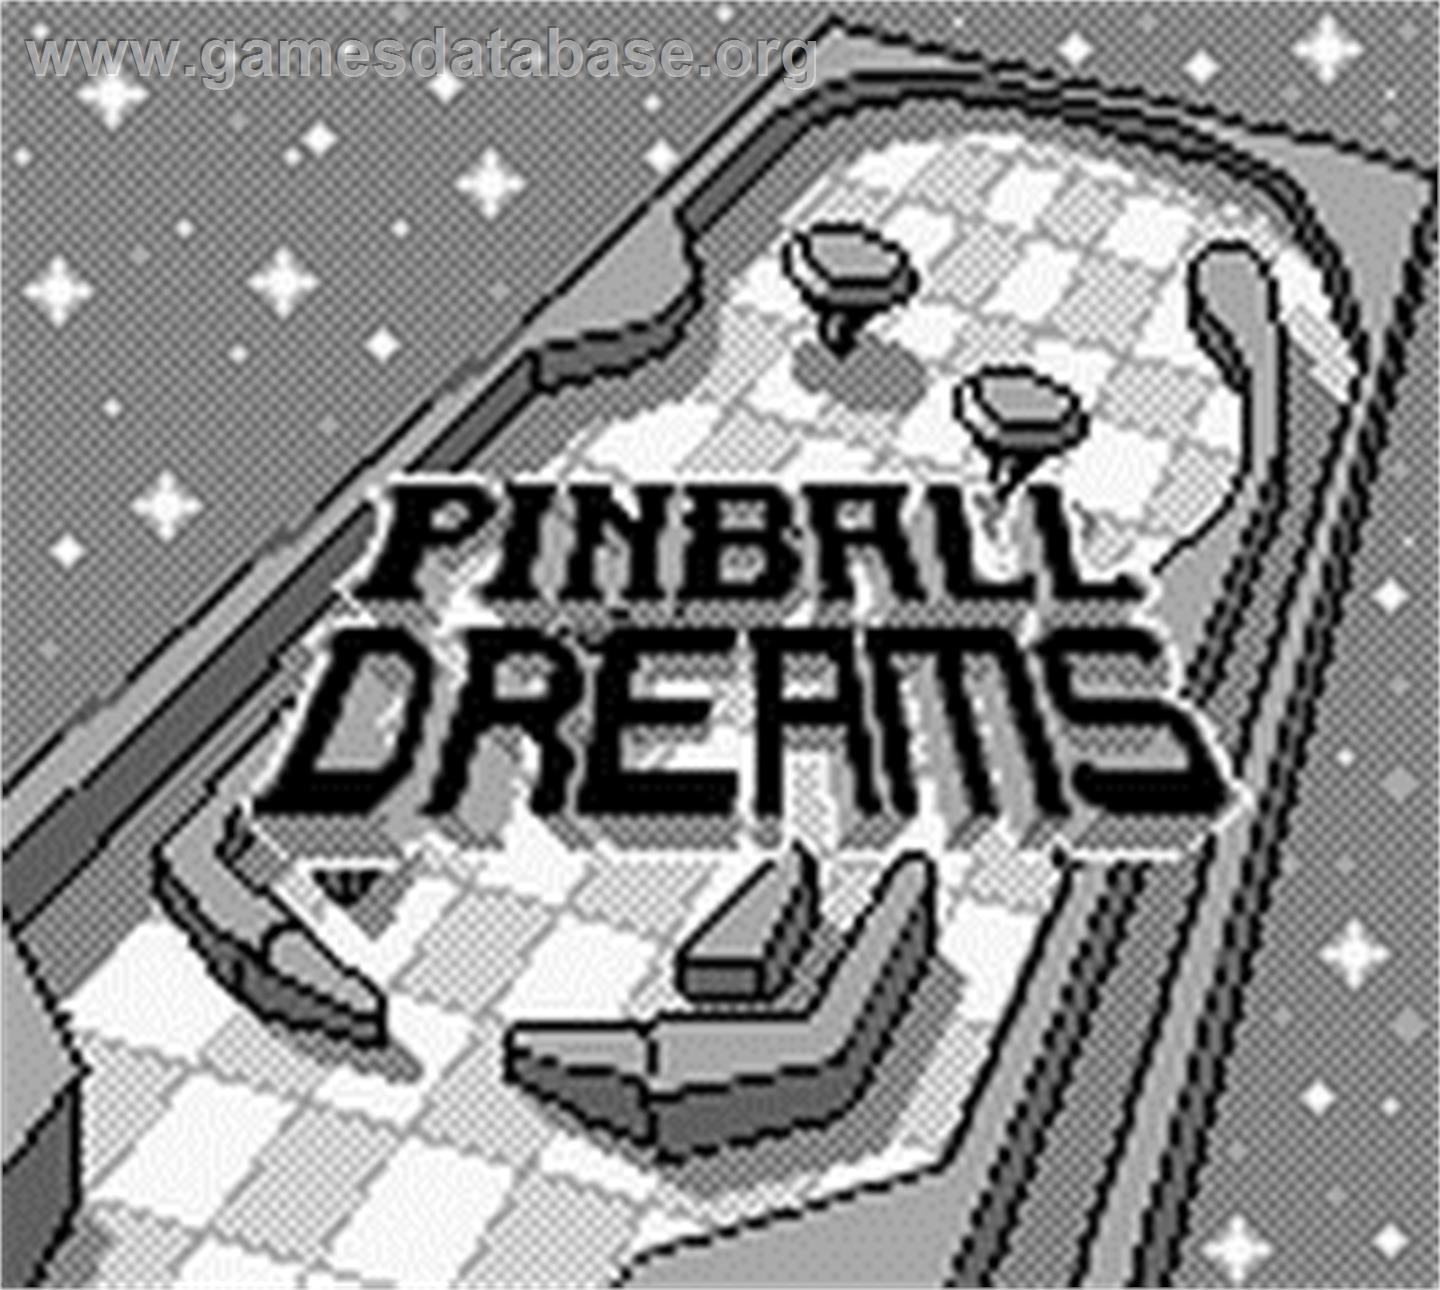 Pinball Dreams - Nintendo Game Boy - Artwork - Title Screen